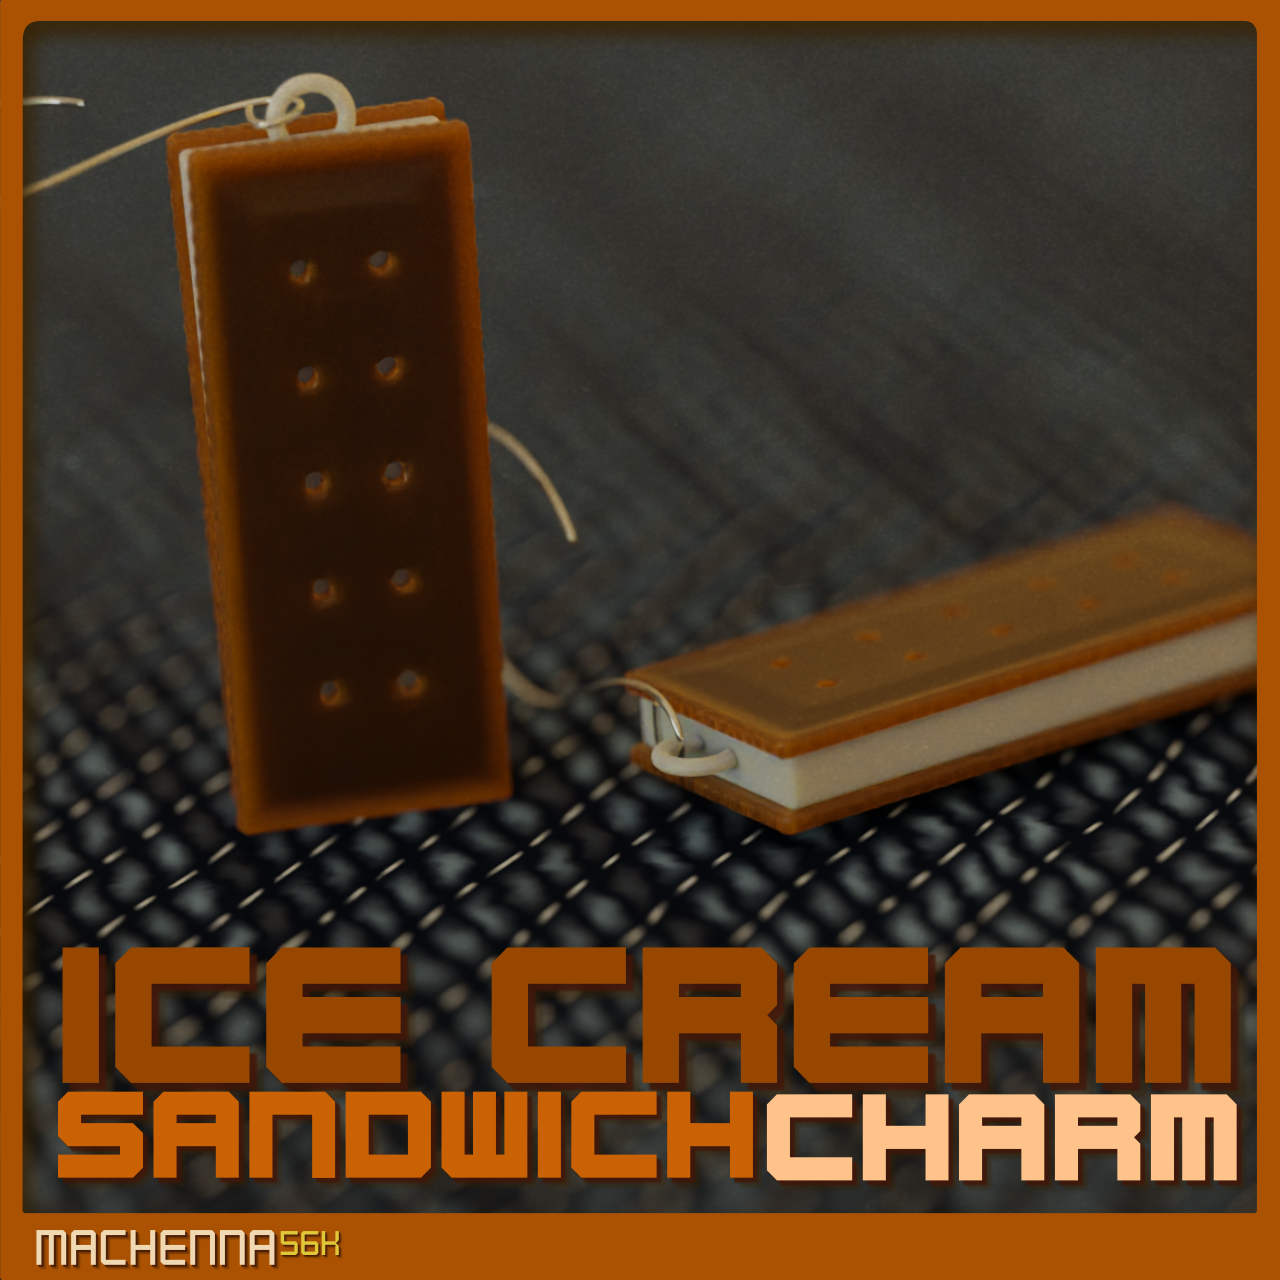 Ice Cream Sandwich Charm